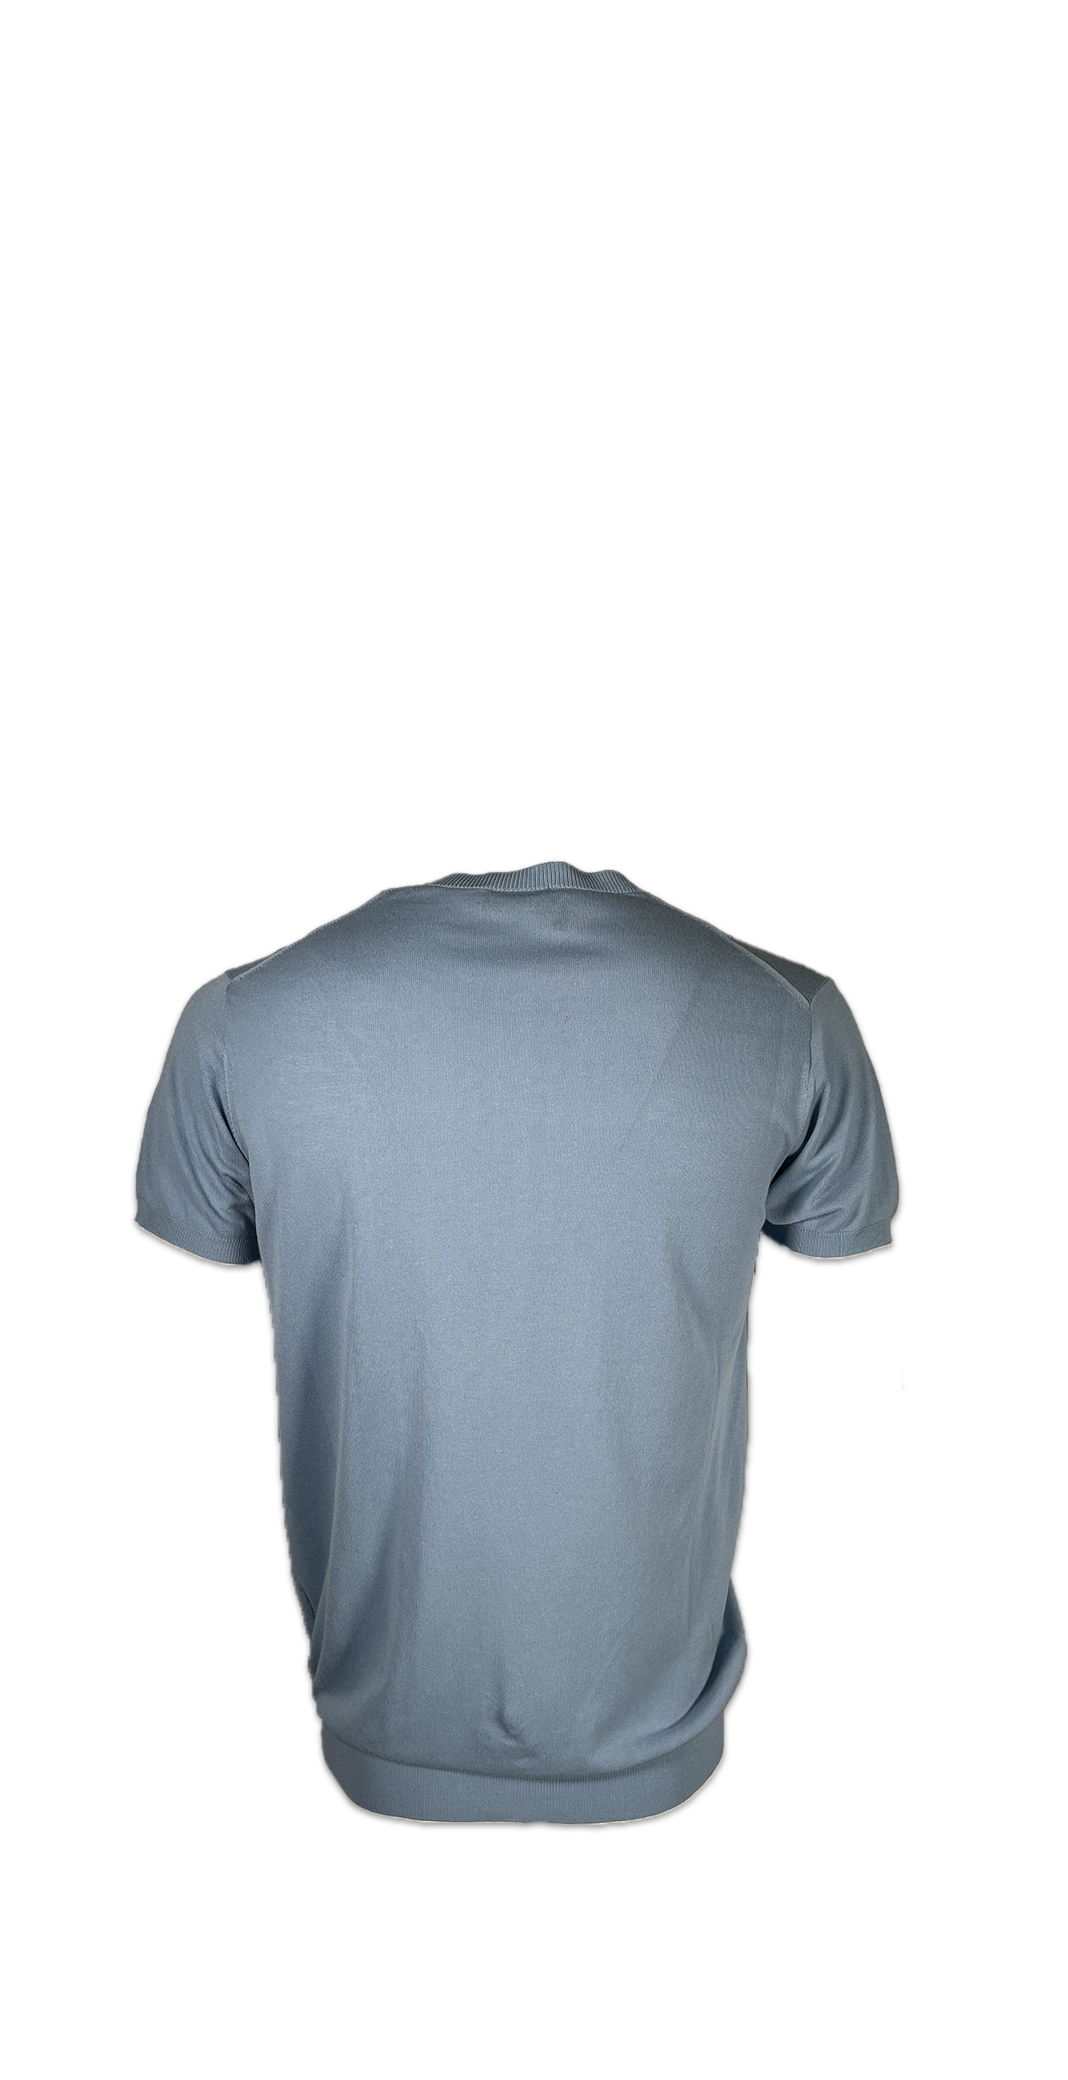 Blu Cashmere T-shirt monocolore